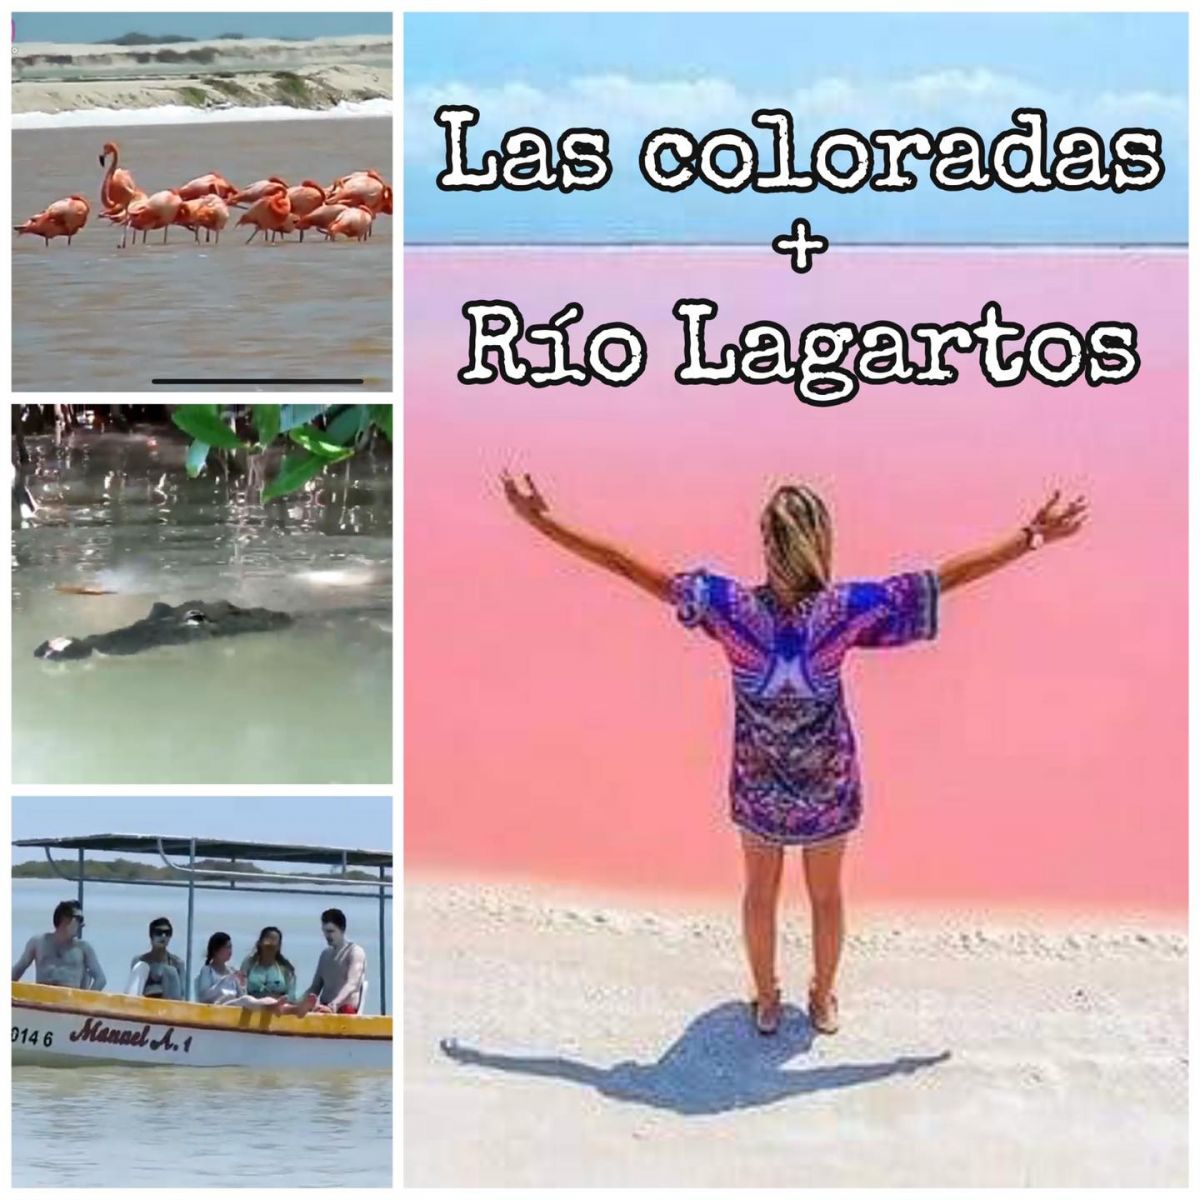 Trip Travel Caribe - Tours - LAS COLORADAS + RIO LAGARTOS, YUCATÁN